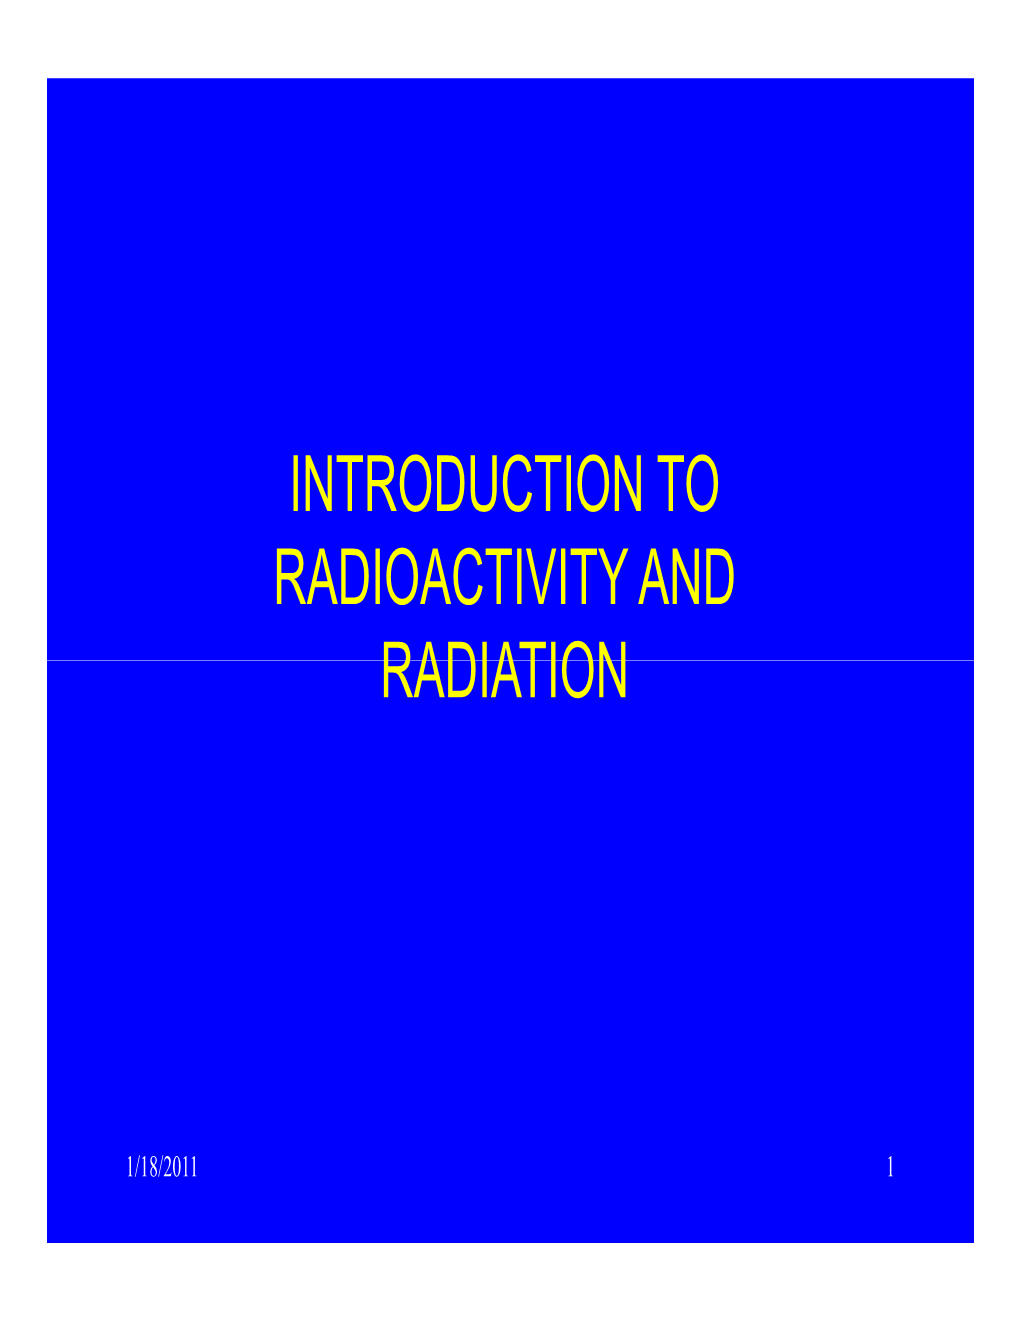 Introduction to Radioactivity and Radiation